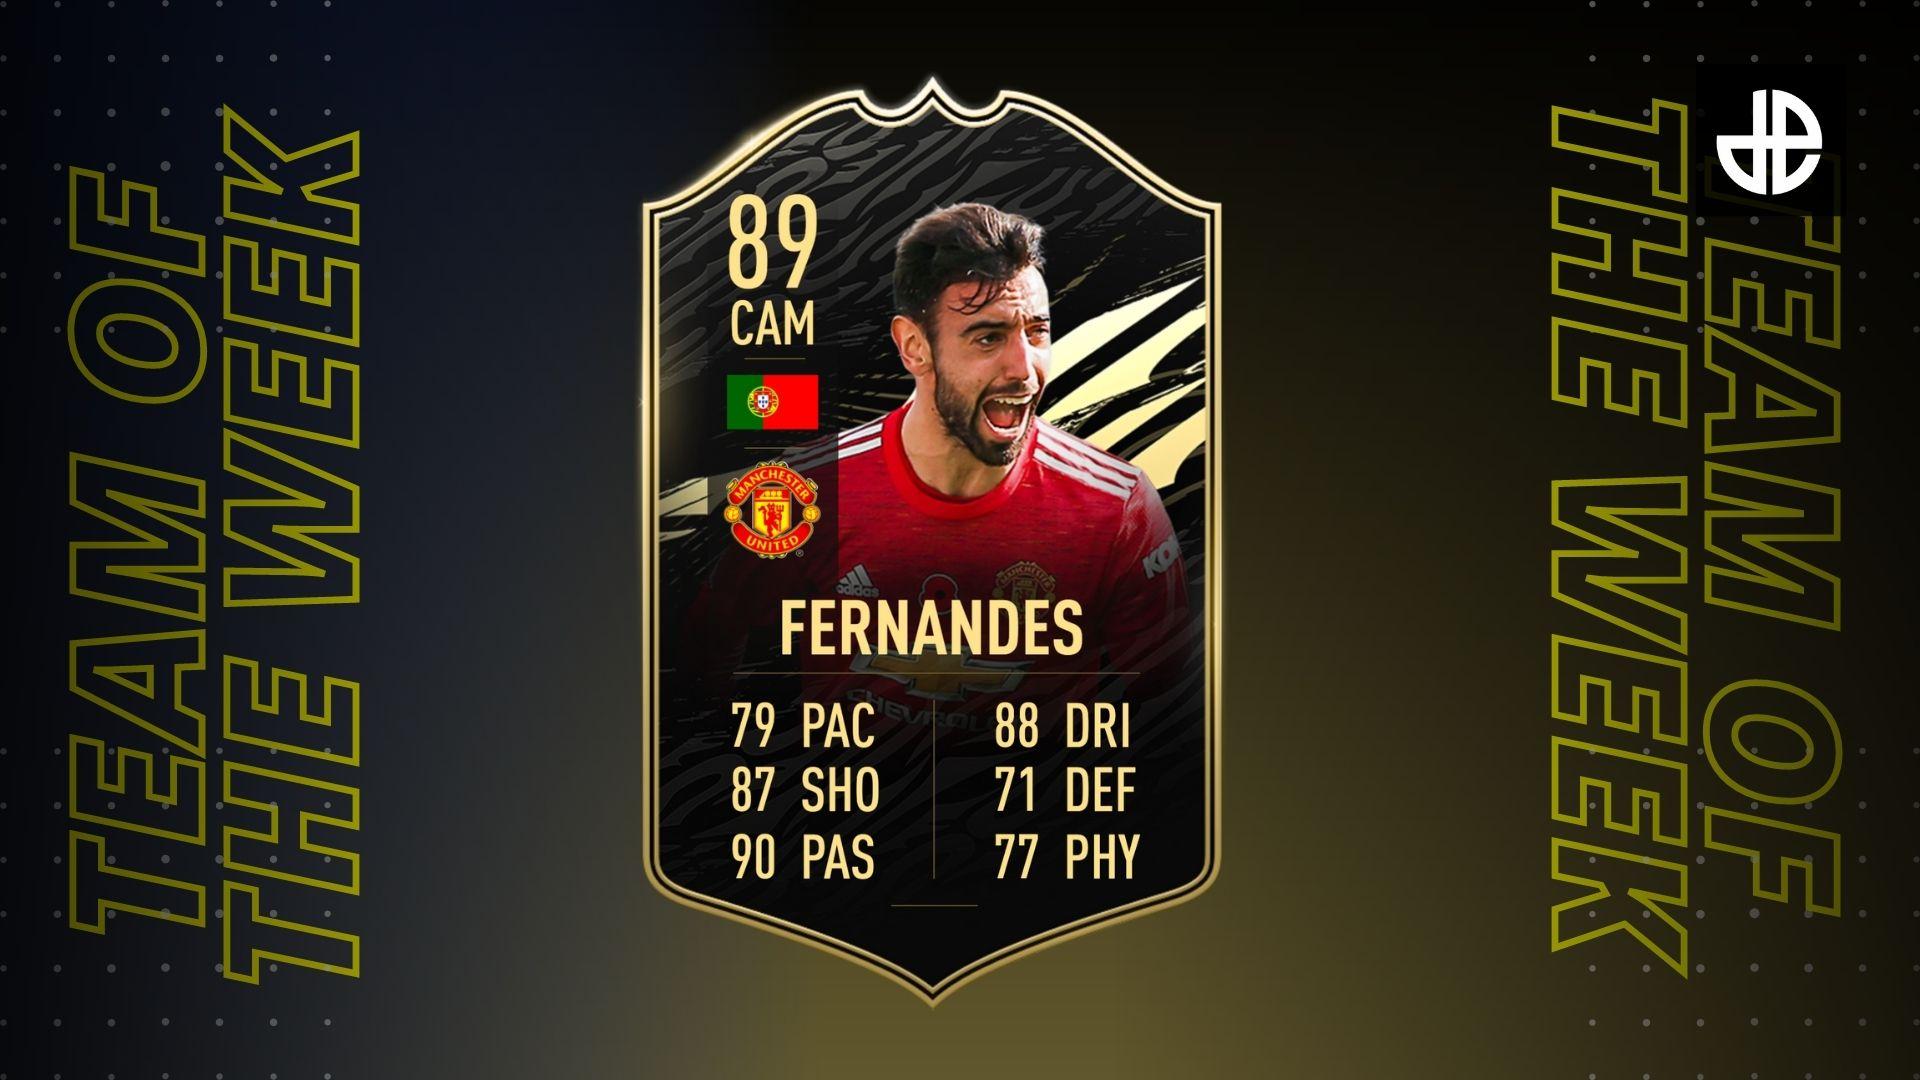 FIFA 21 TOTW 7 Fernandes